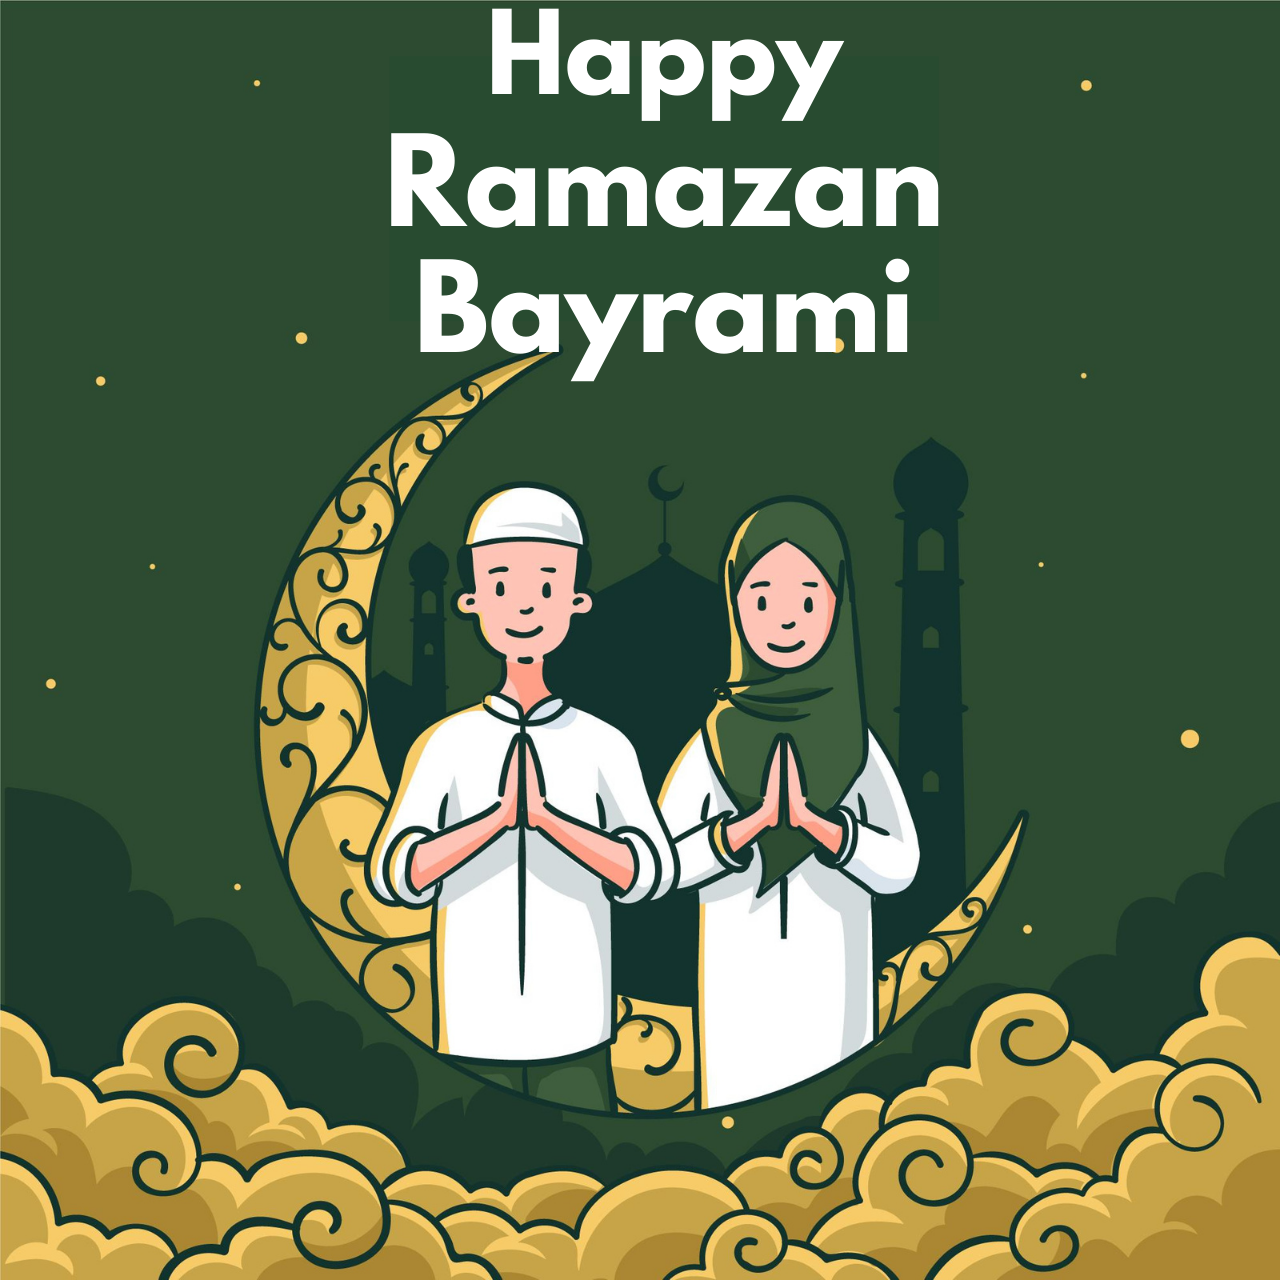 Happy Ramazan Bayrami 2021 Images, Greetings, whatsApp mesajlari, and Quotes to share on this Eid al-Fitr